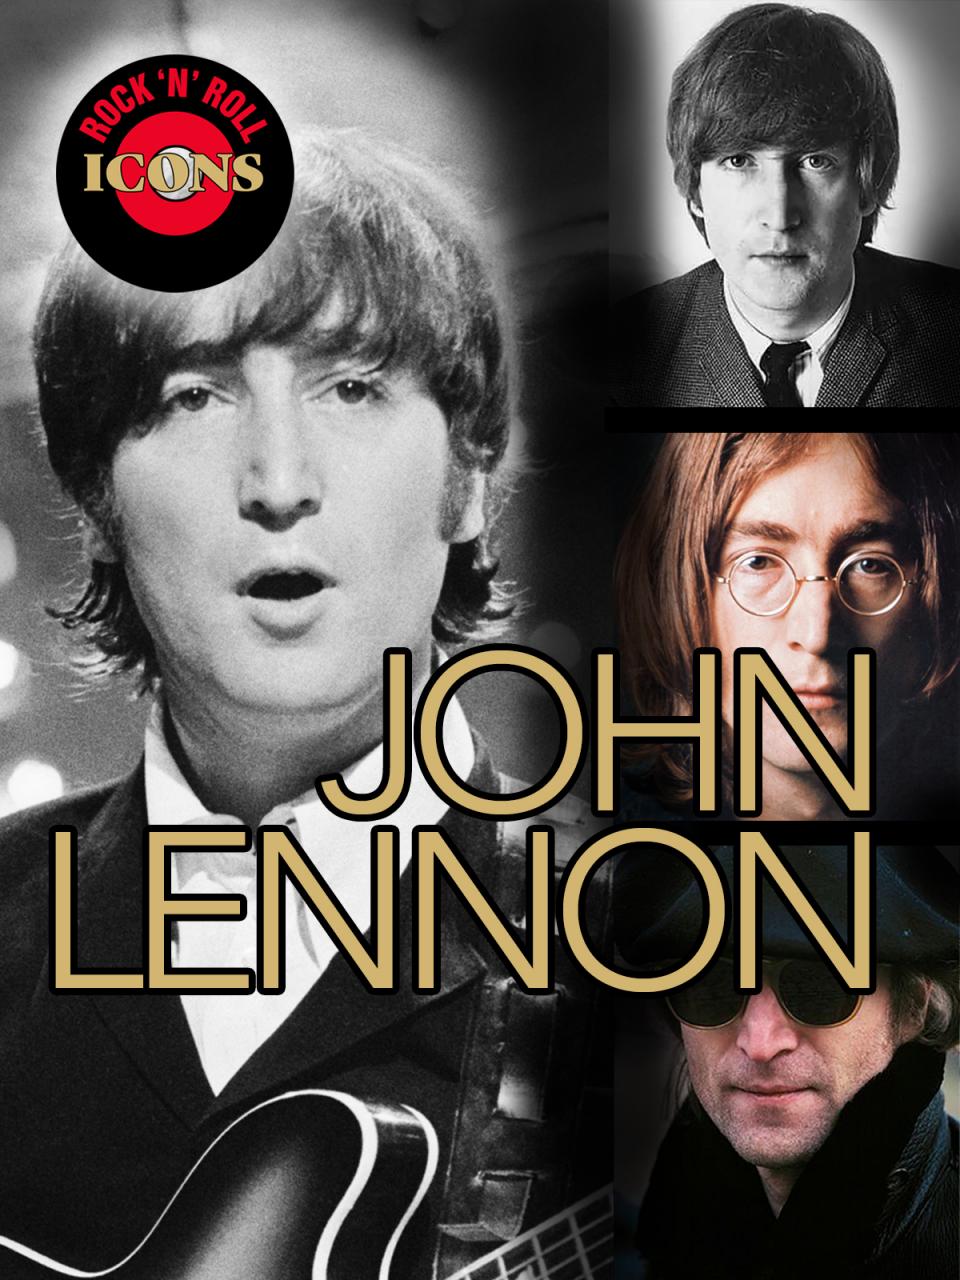 Rock 'n Roll Icons: John Lennon